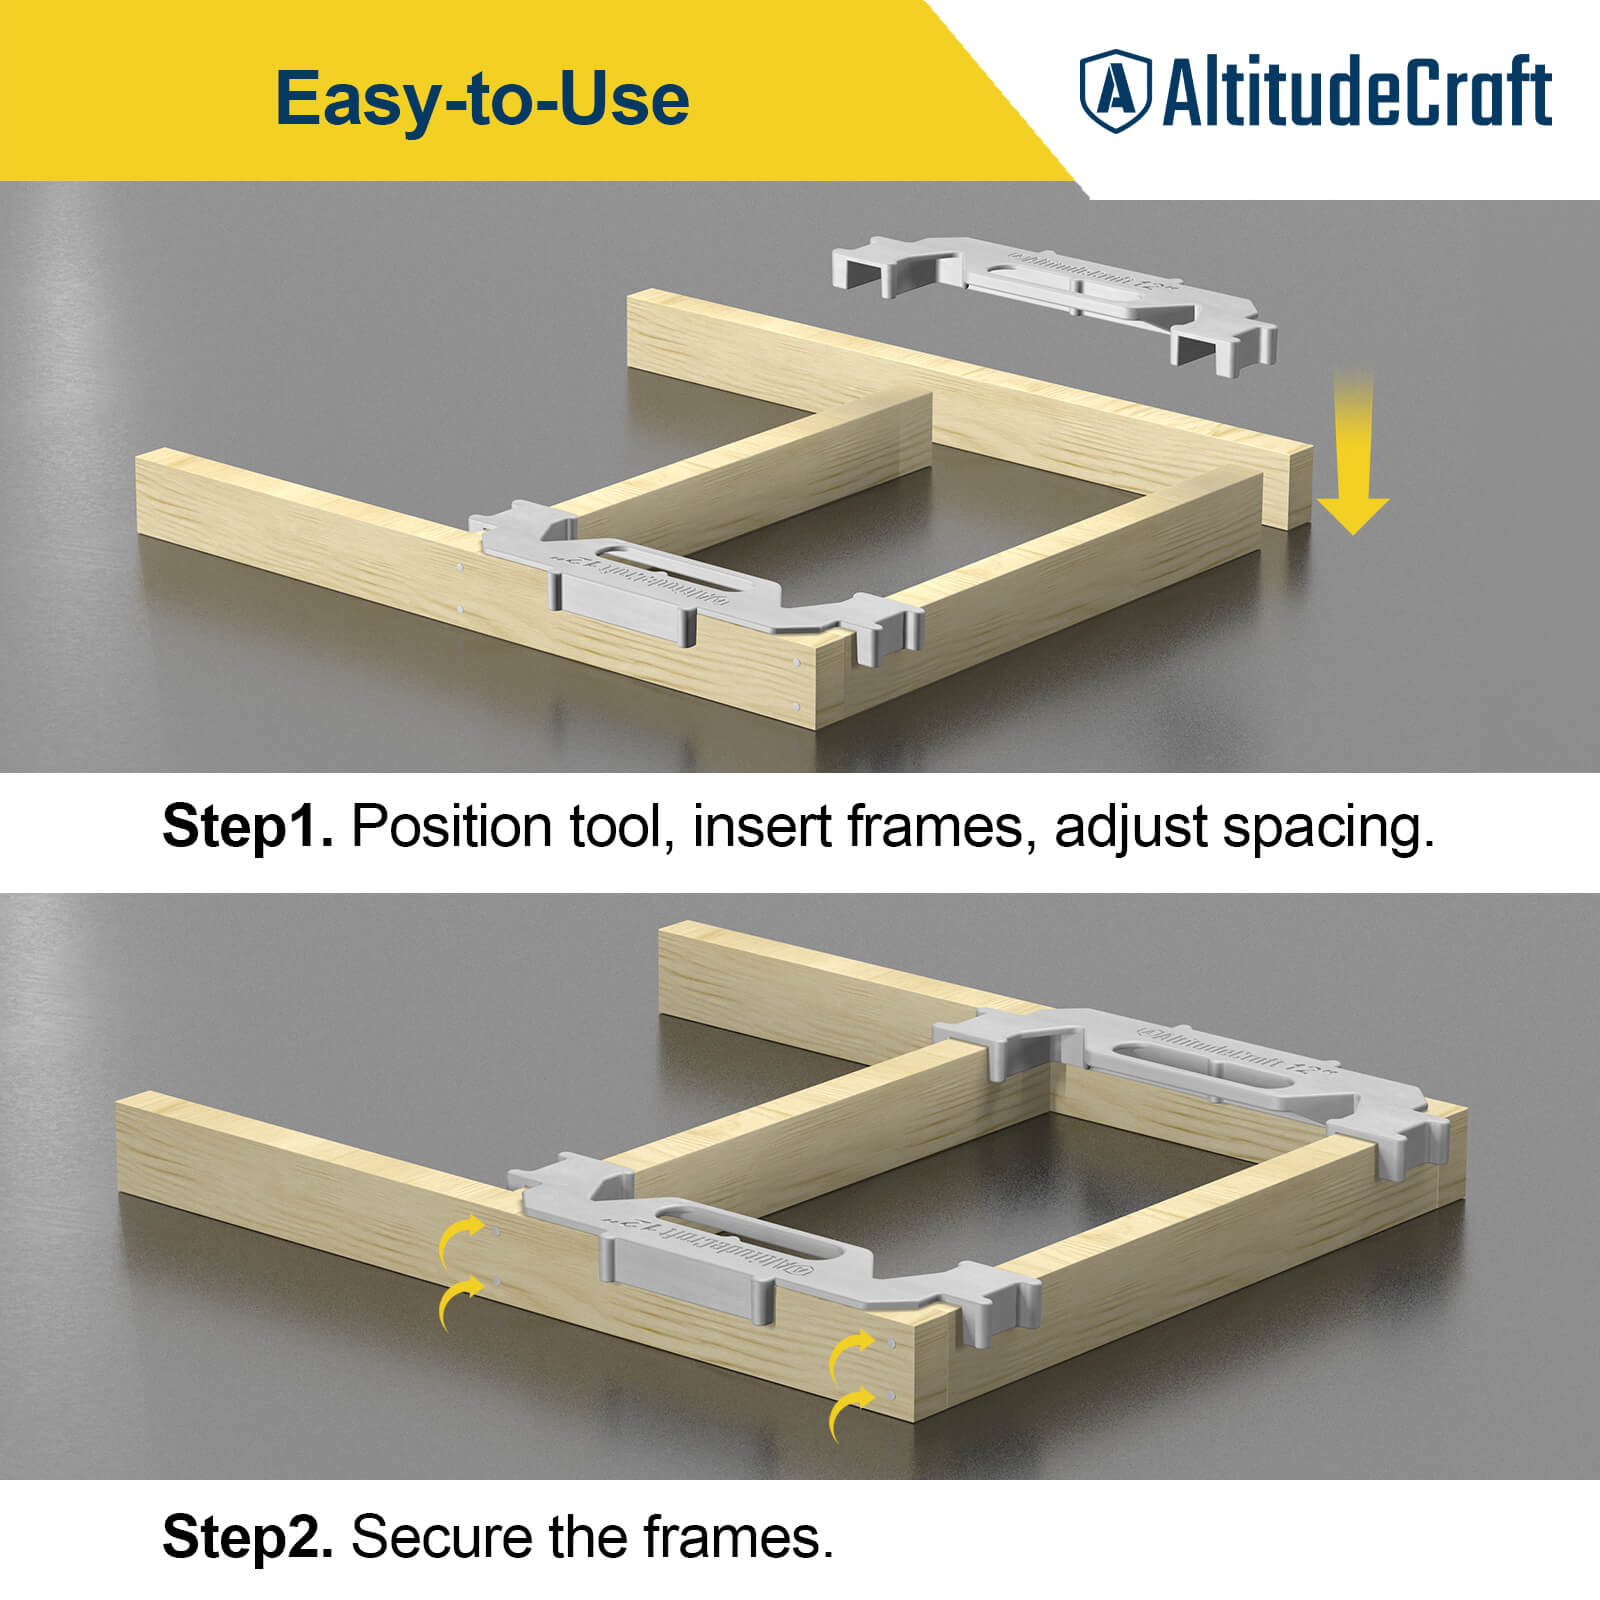 AltitudeCraft 12" Framing Tool: Precision Stud Layout for Faster Construction - AltitudeCraft